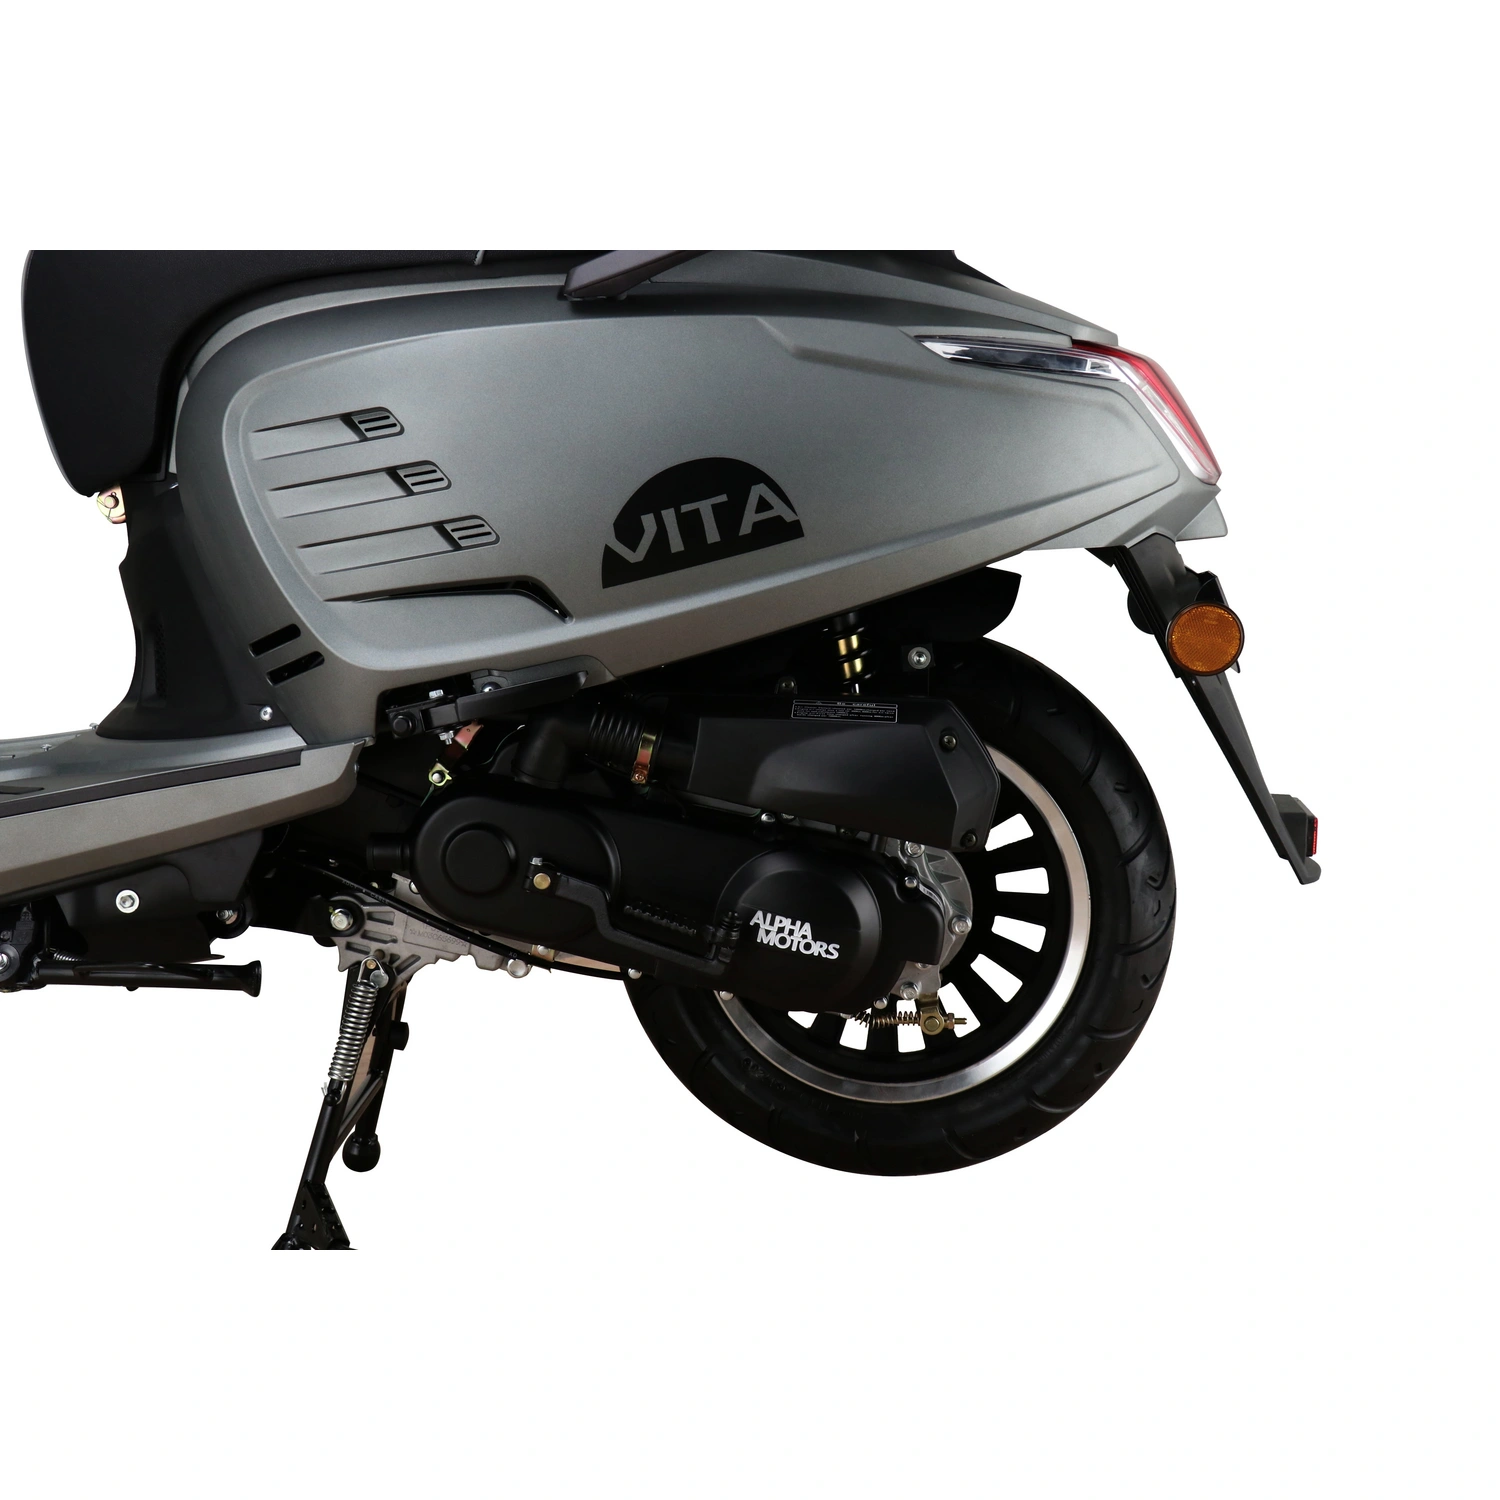 ALPHA MOTORS Motorroller »Vita«, 50 5 Euro 45km/h, cm³